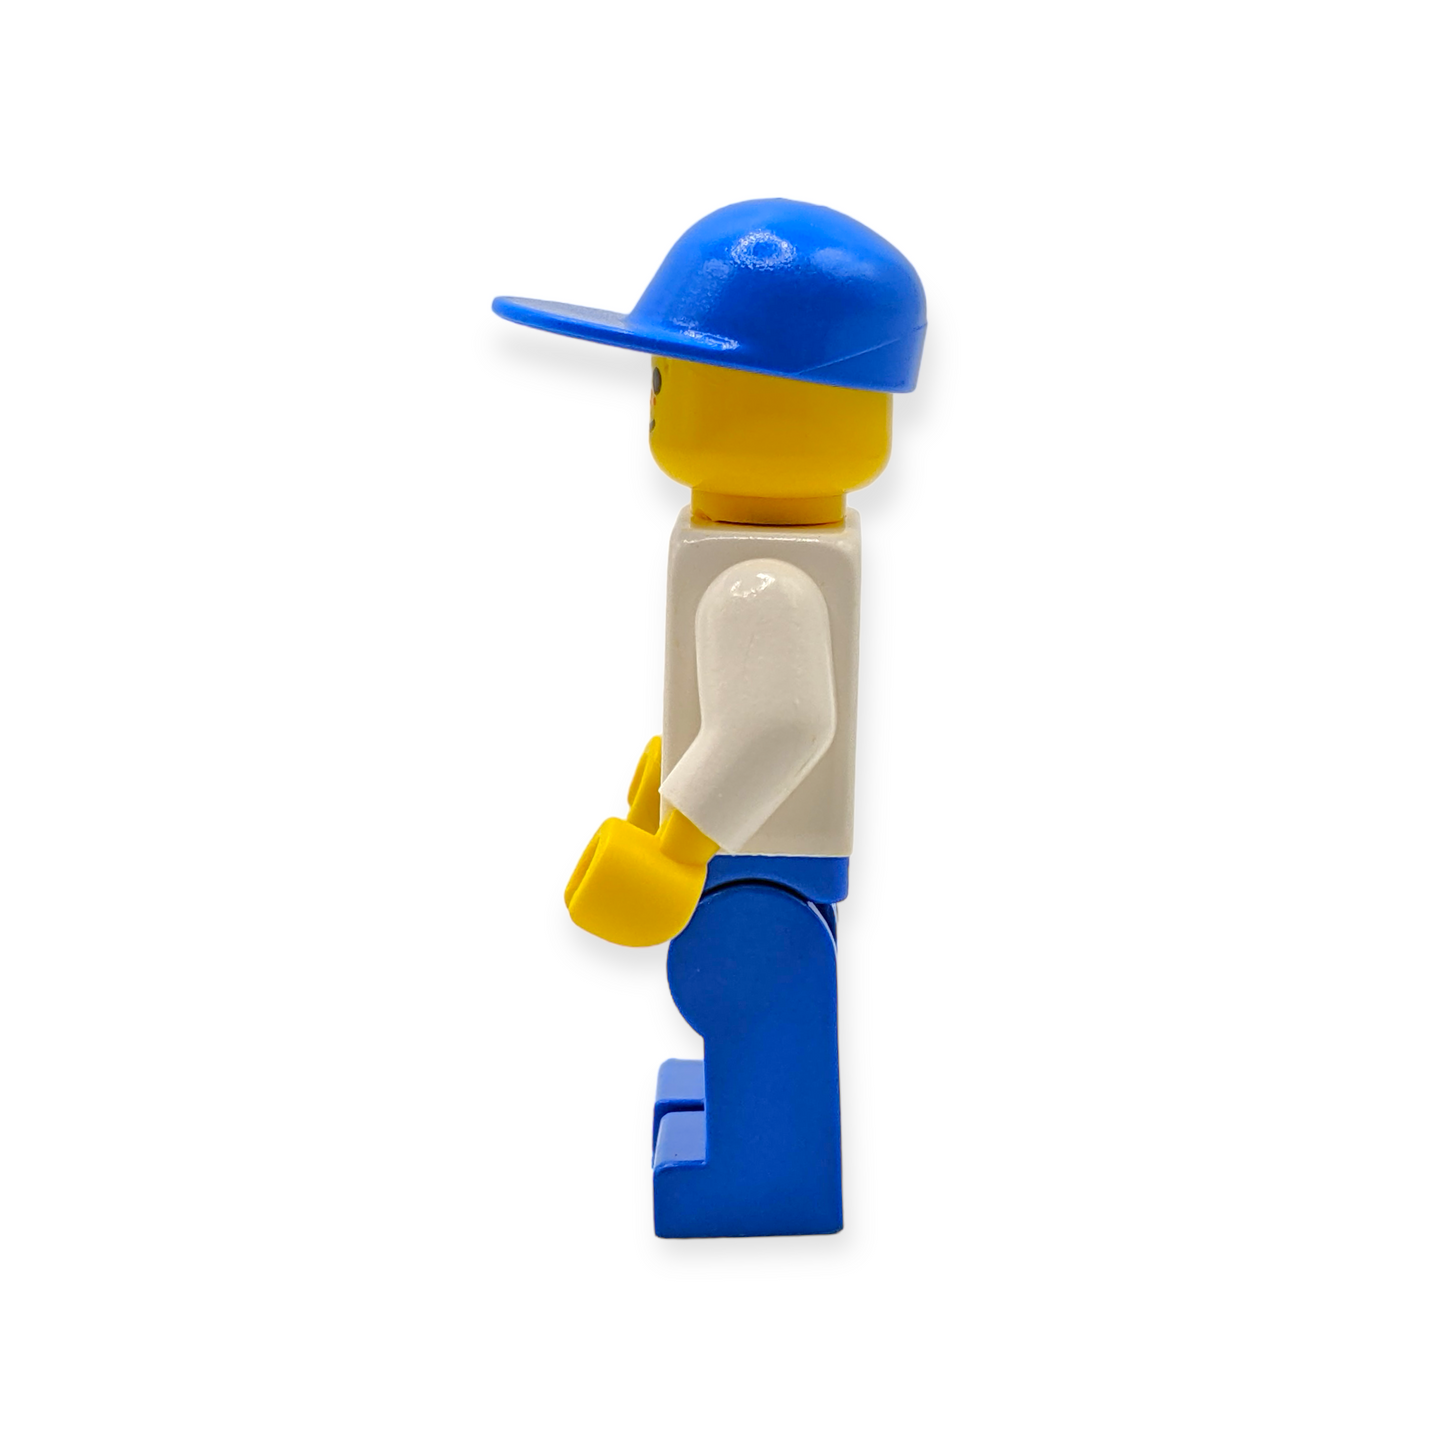 LEGO Minifigur Palm Tree - Blue Legs, Blue Cap trn036